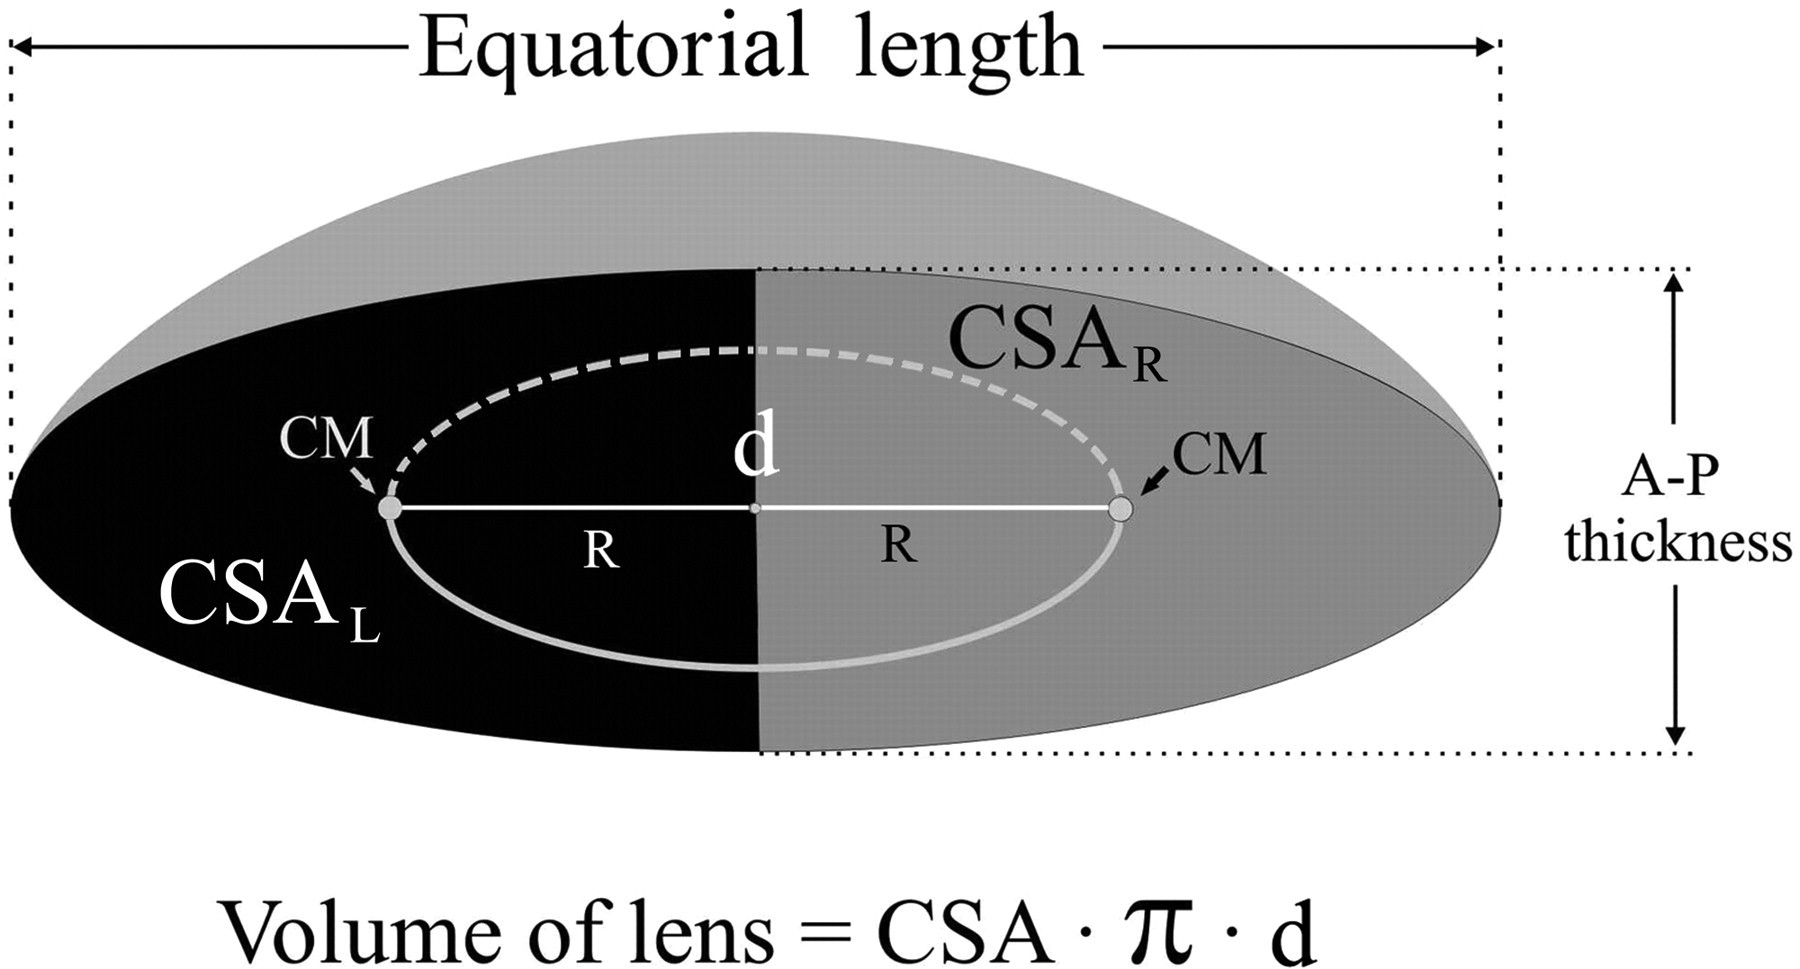 Volume change of the ocular lens during